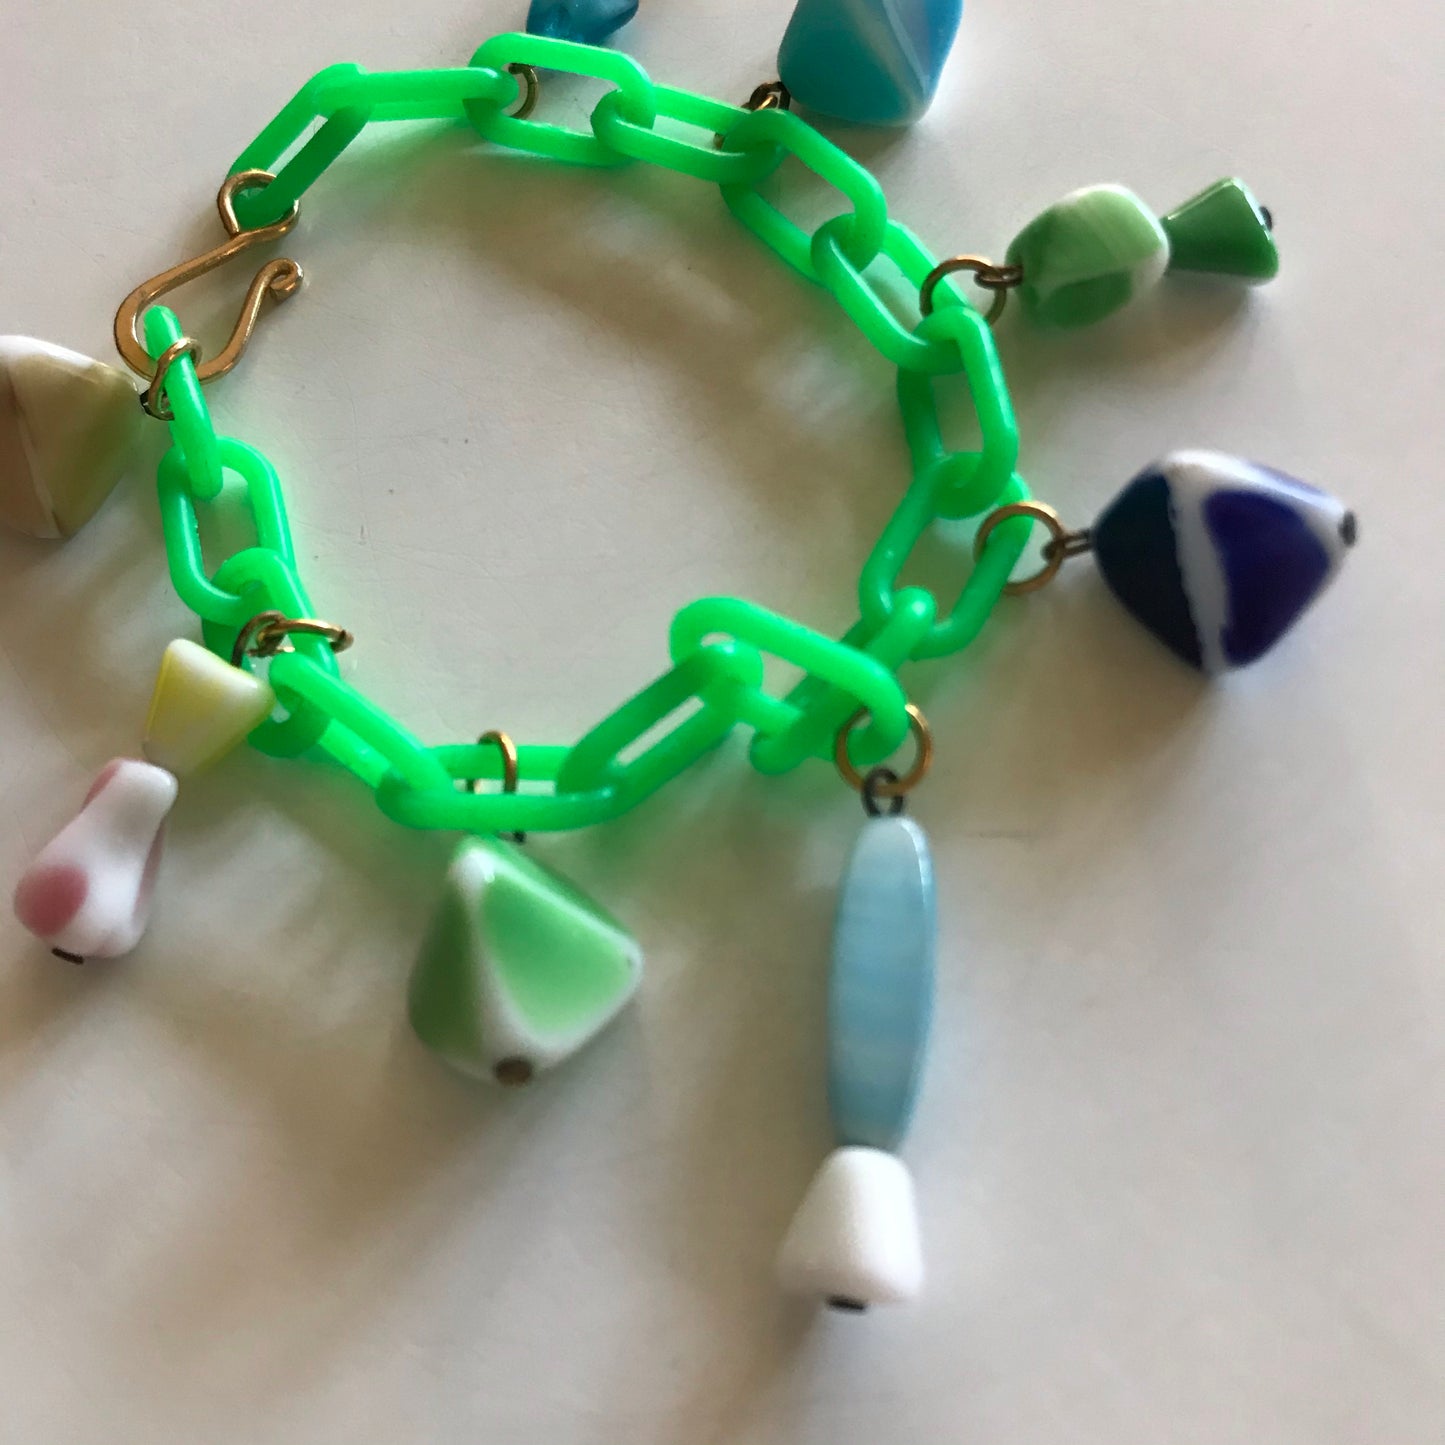 Neon Green Plastic Chain Charm Bracelet circa 1980s